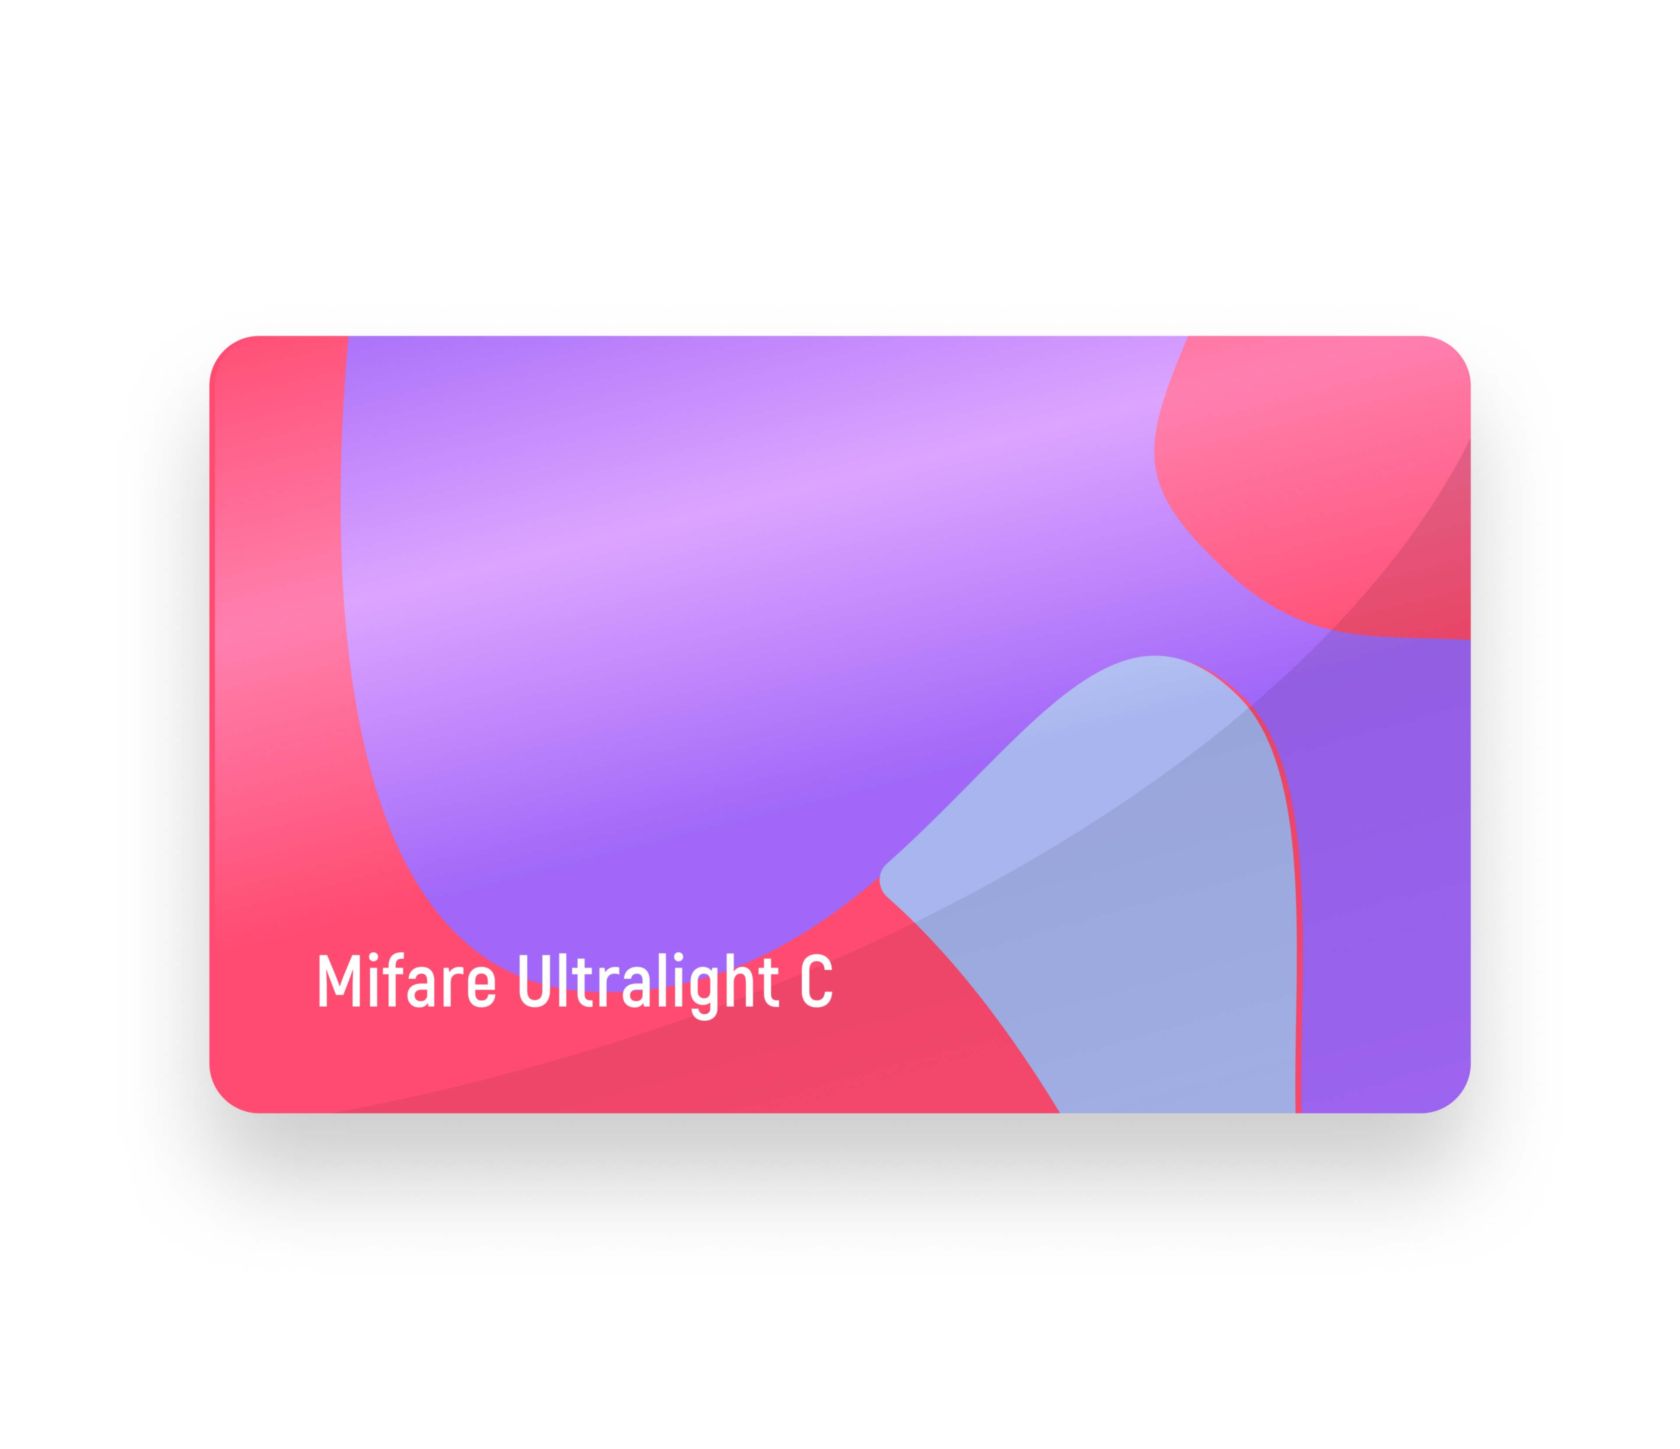 Mifare Ultralight C